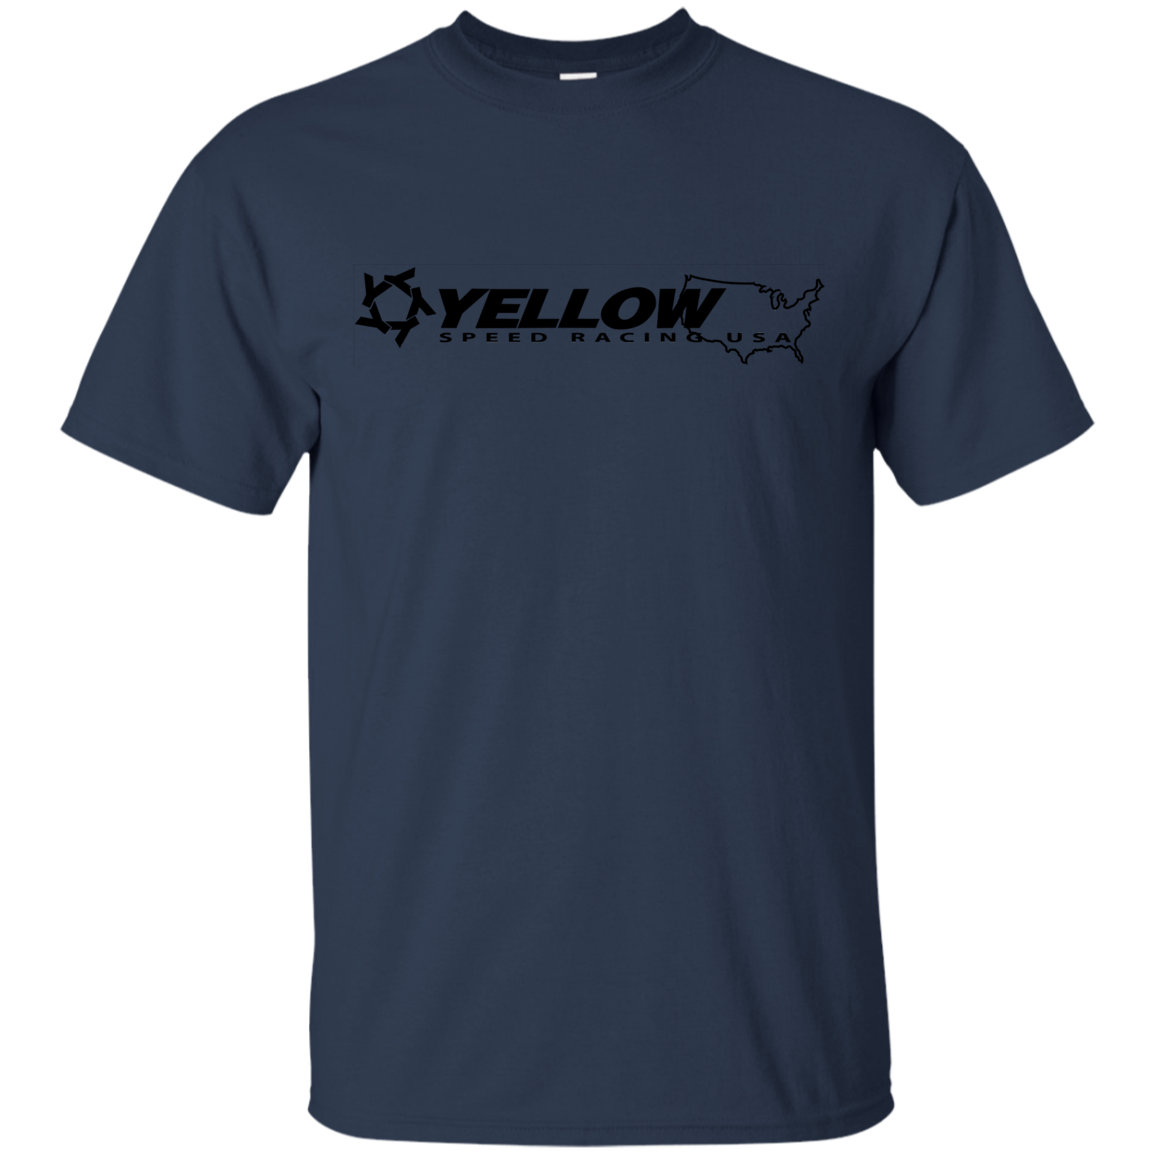 Yellow Speed Racing USA T-Shirt